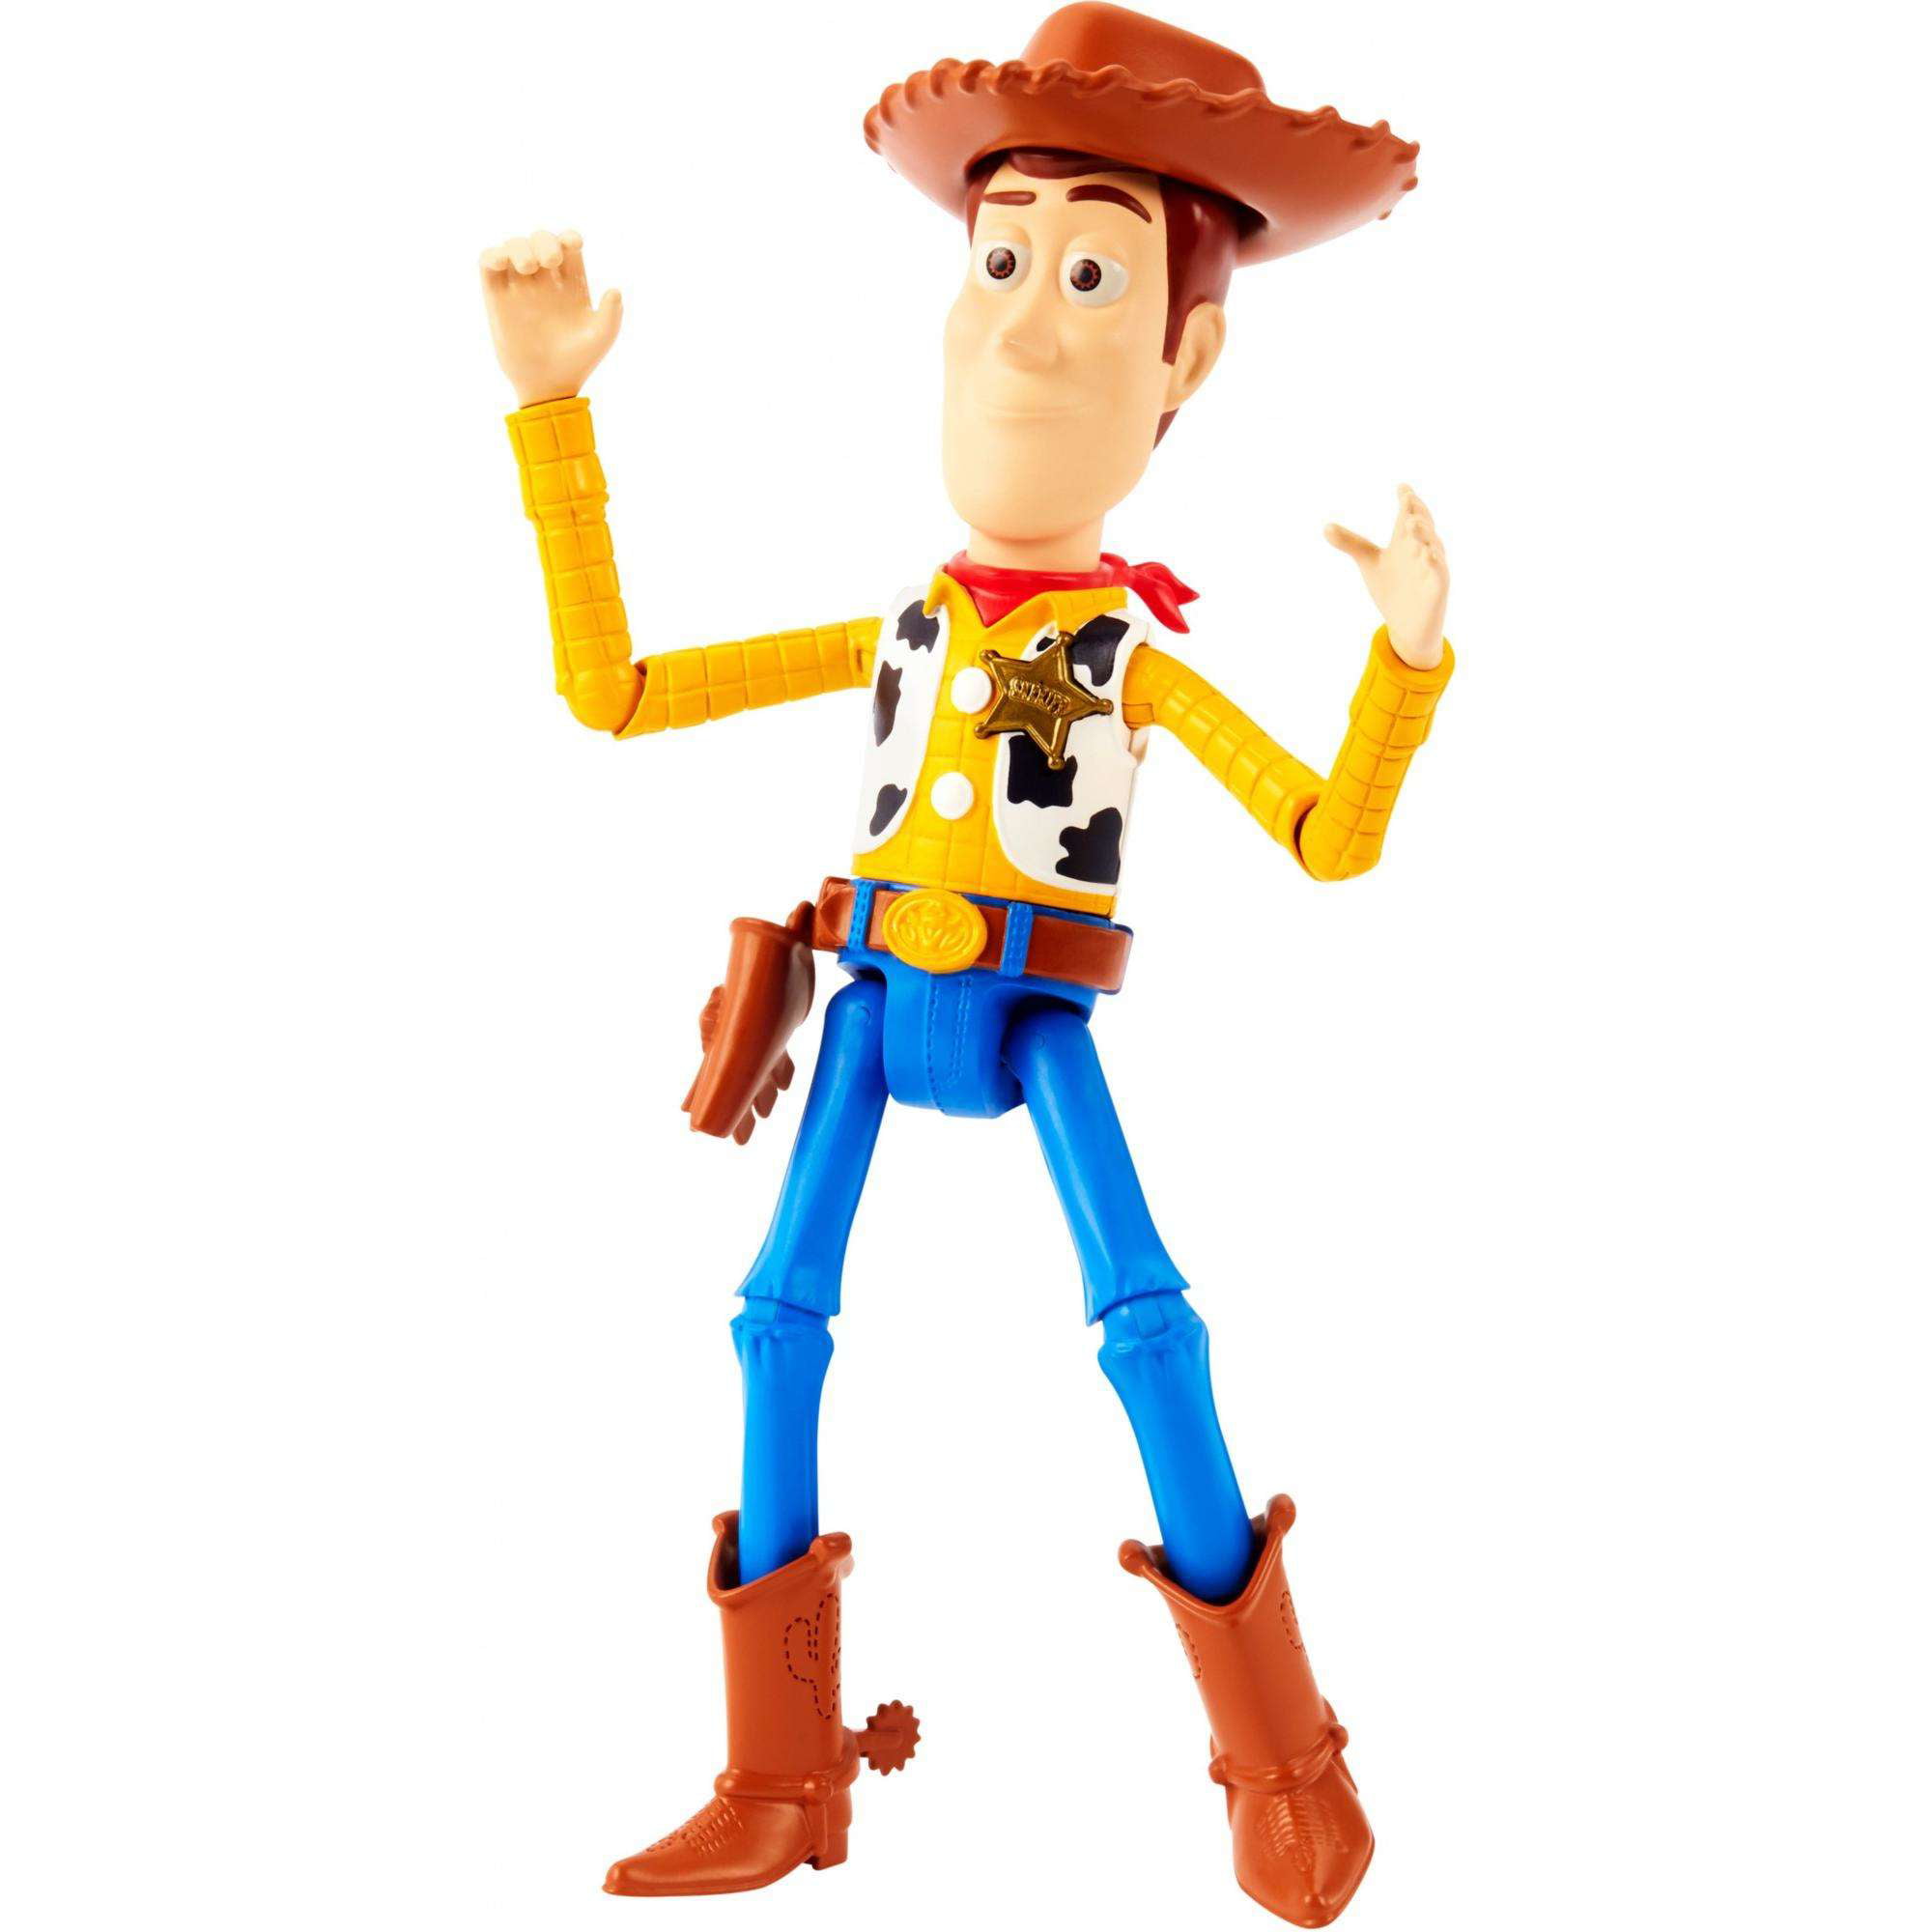 Disney Pixar Toy Story Talking Woody Action Figure 7